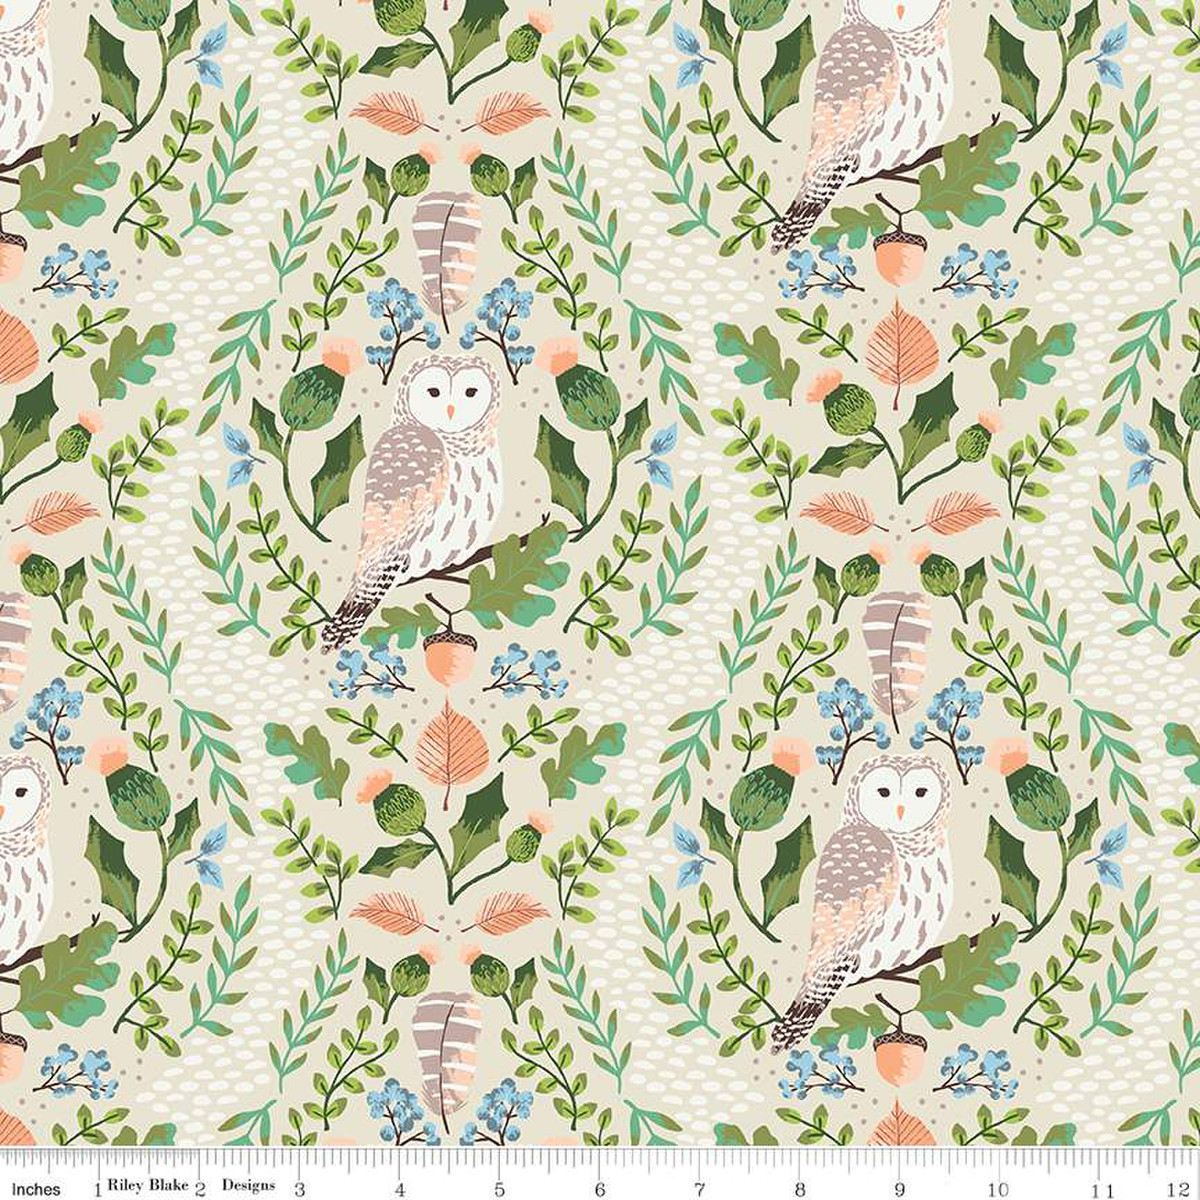 Wildwood Wander Fabric by Riley Blake Designs